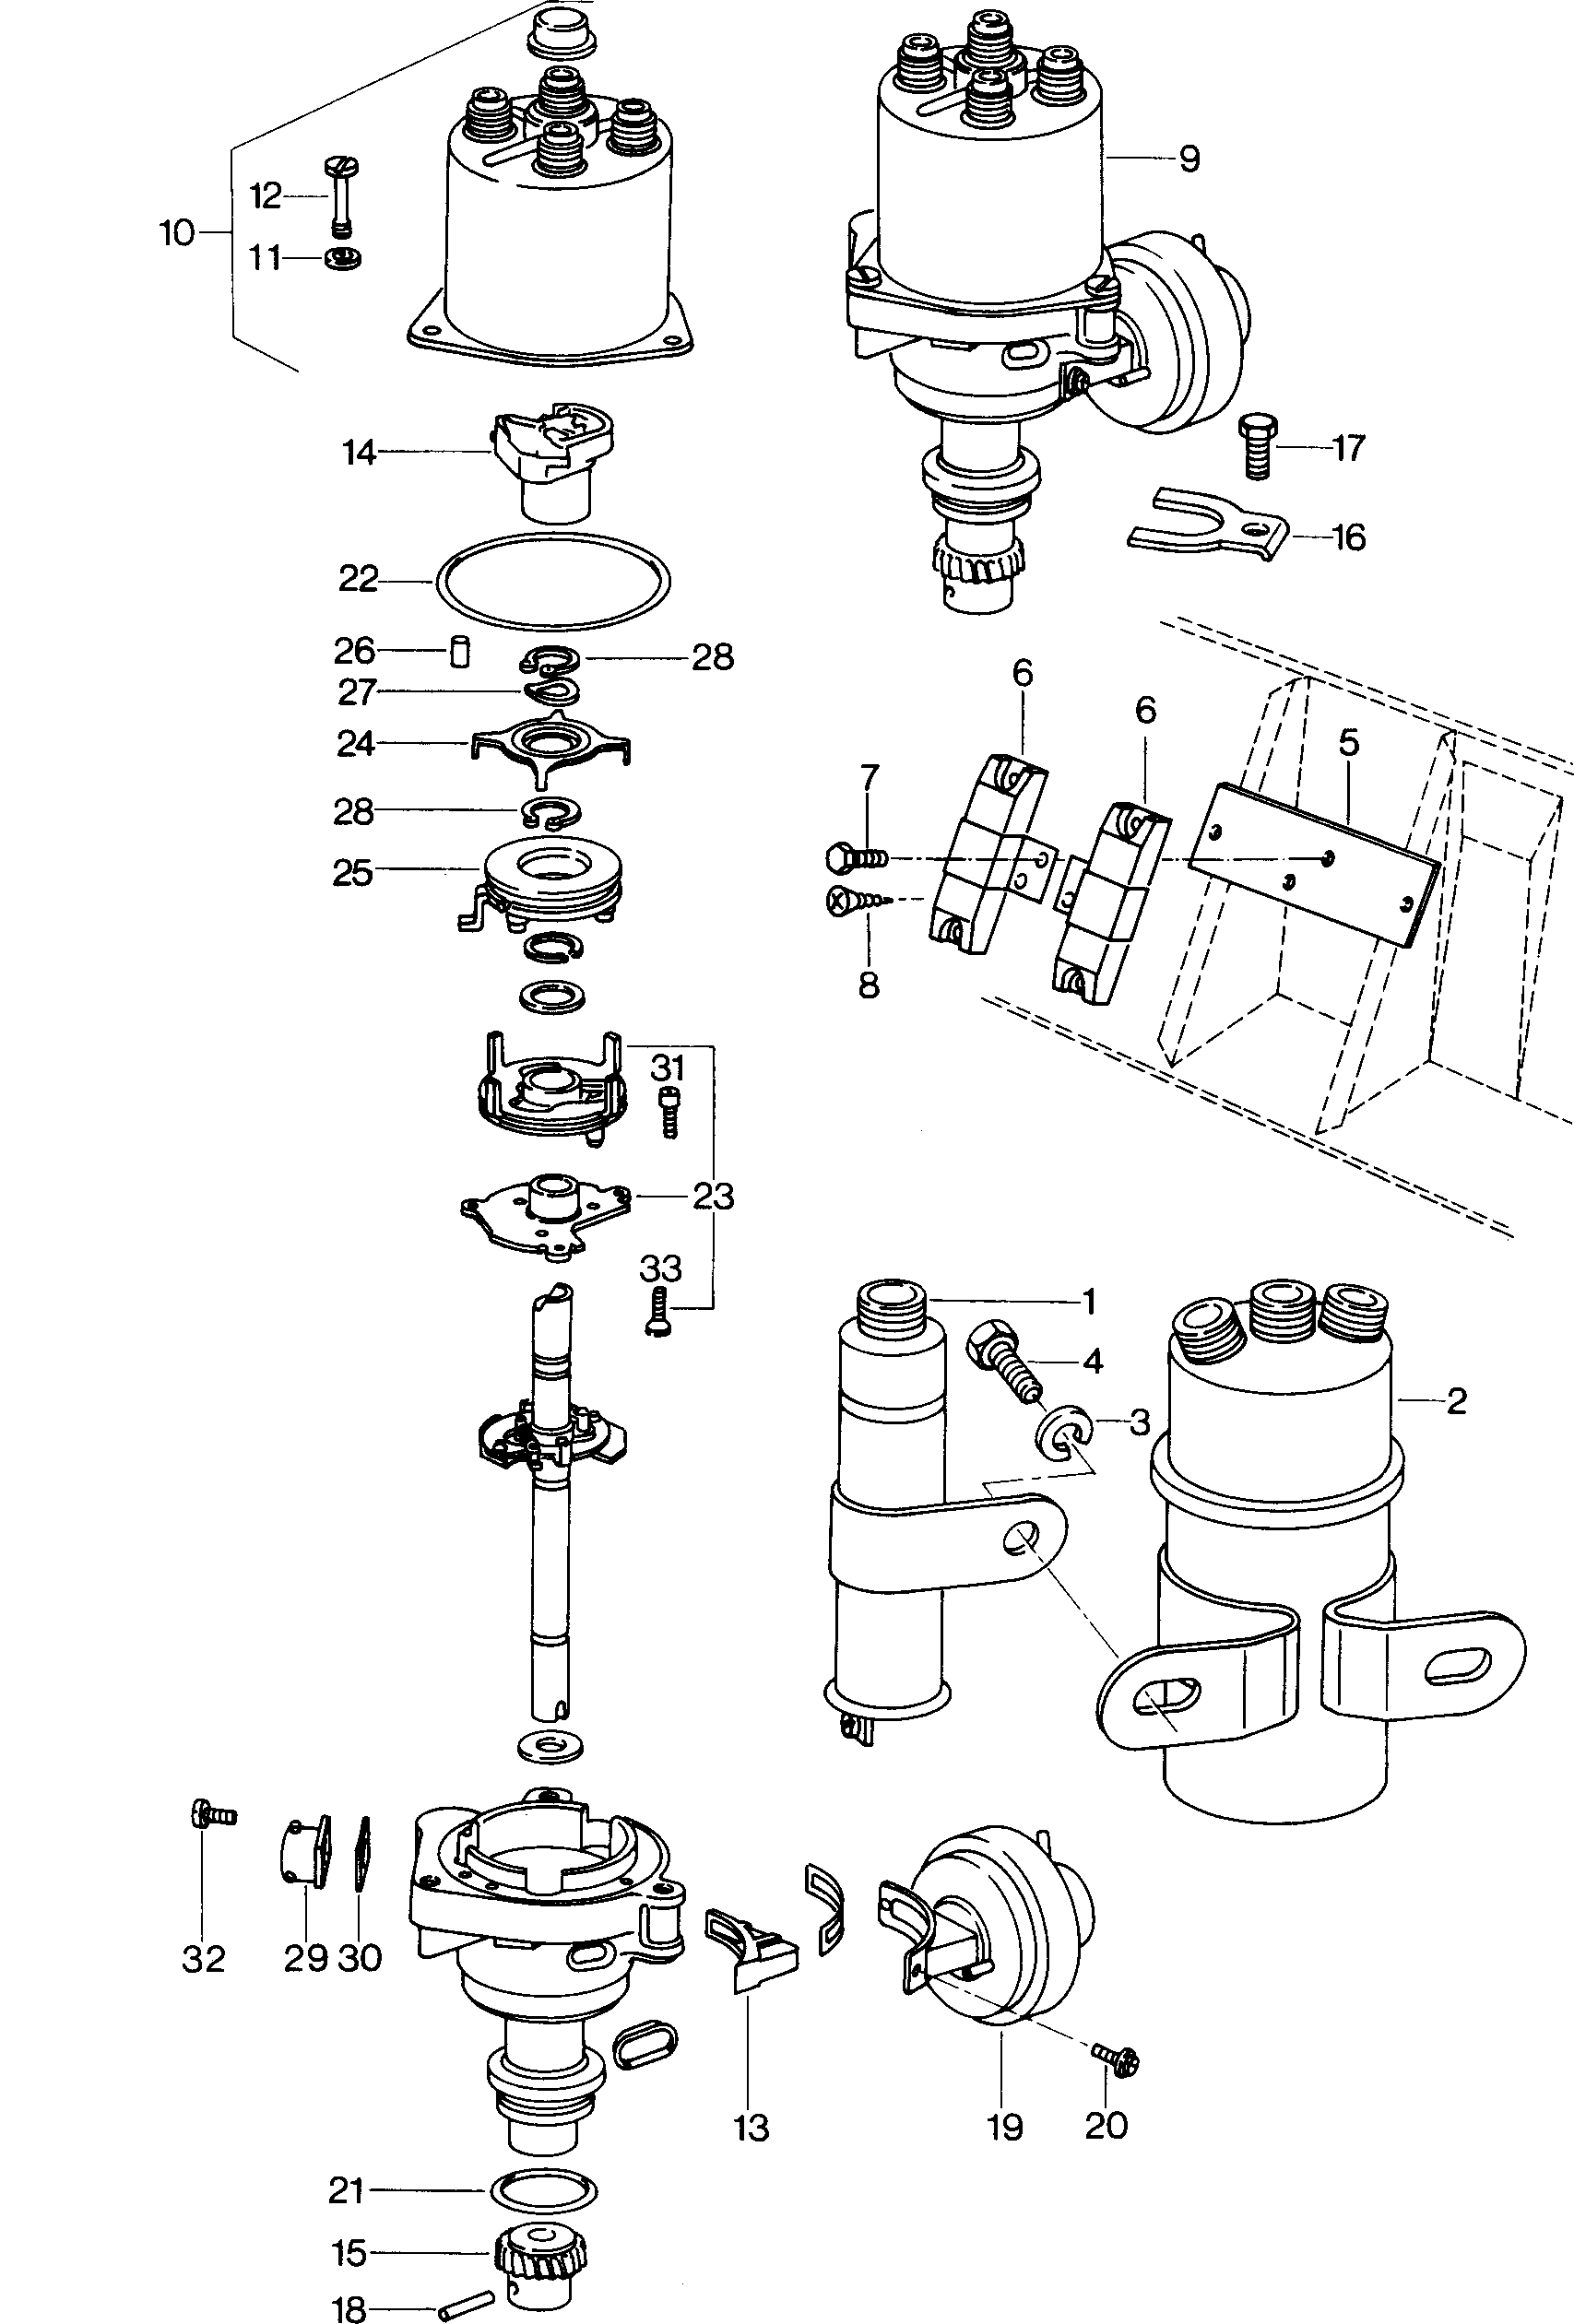 Ignition coilDistributor 24V - Mod.181 / Iltis - ilt